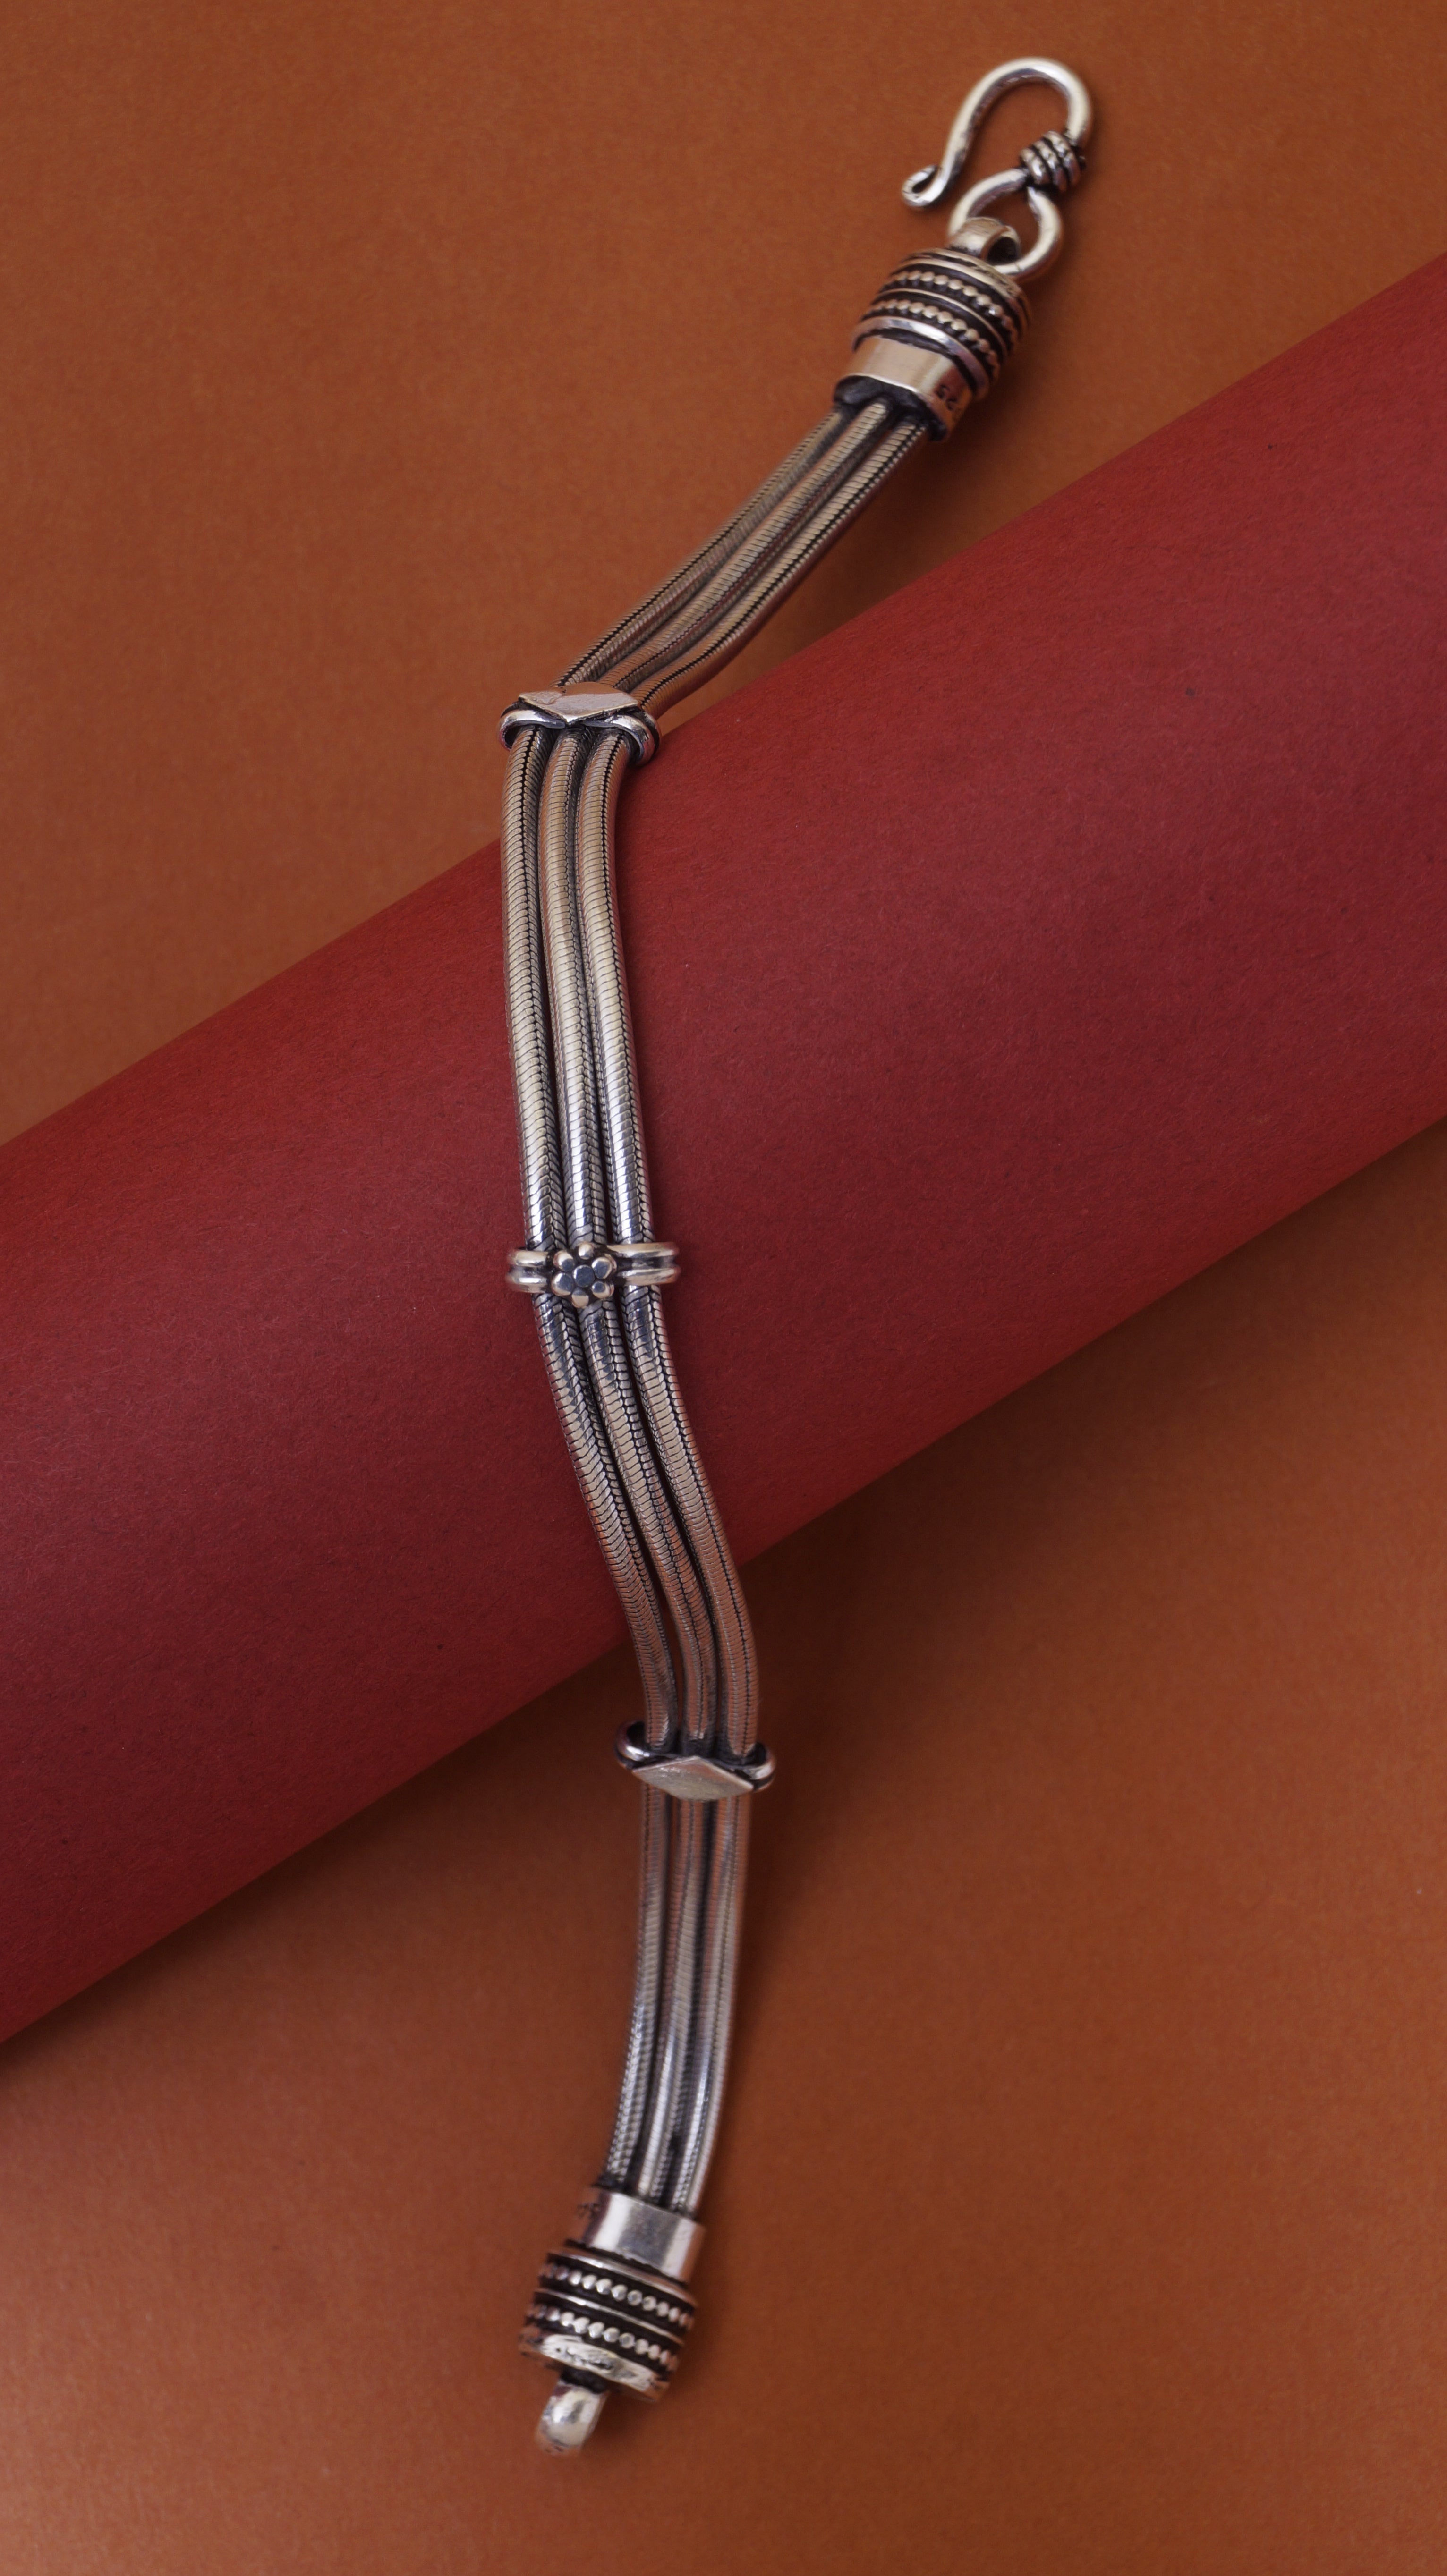 Elephant Hair Knot style 3 strand silver bracelet | Quality elephant hair  knot bracelets/bangles